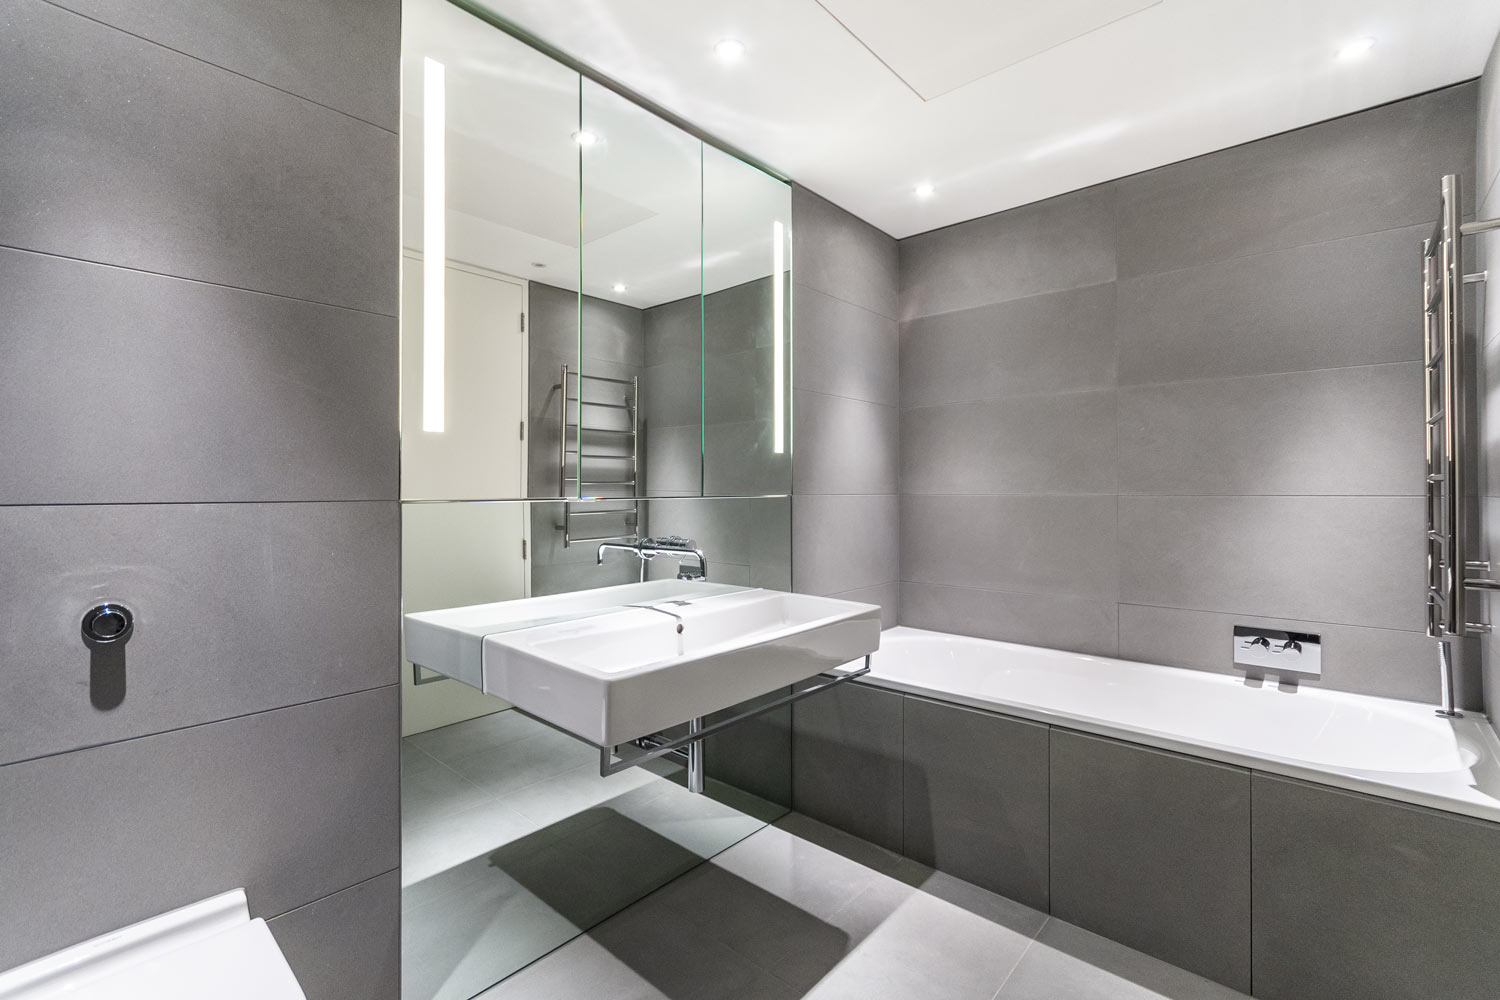 Bathroom Tile Ideas For Small Bathrooms, Commercial Restroom Tile Ideas